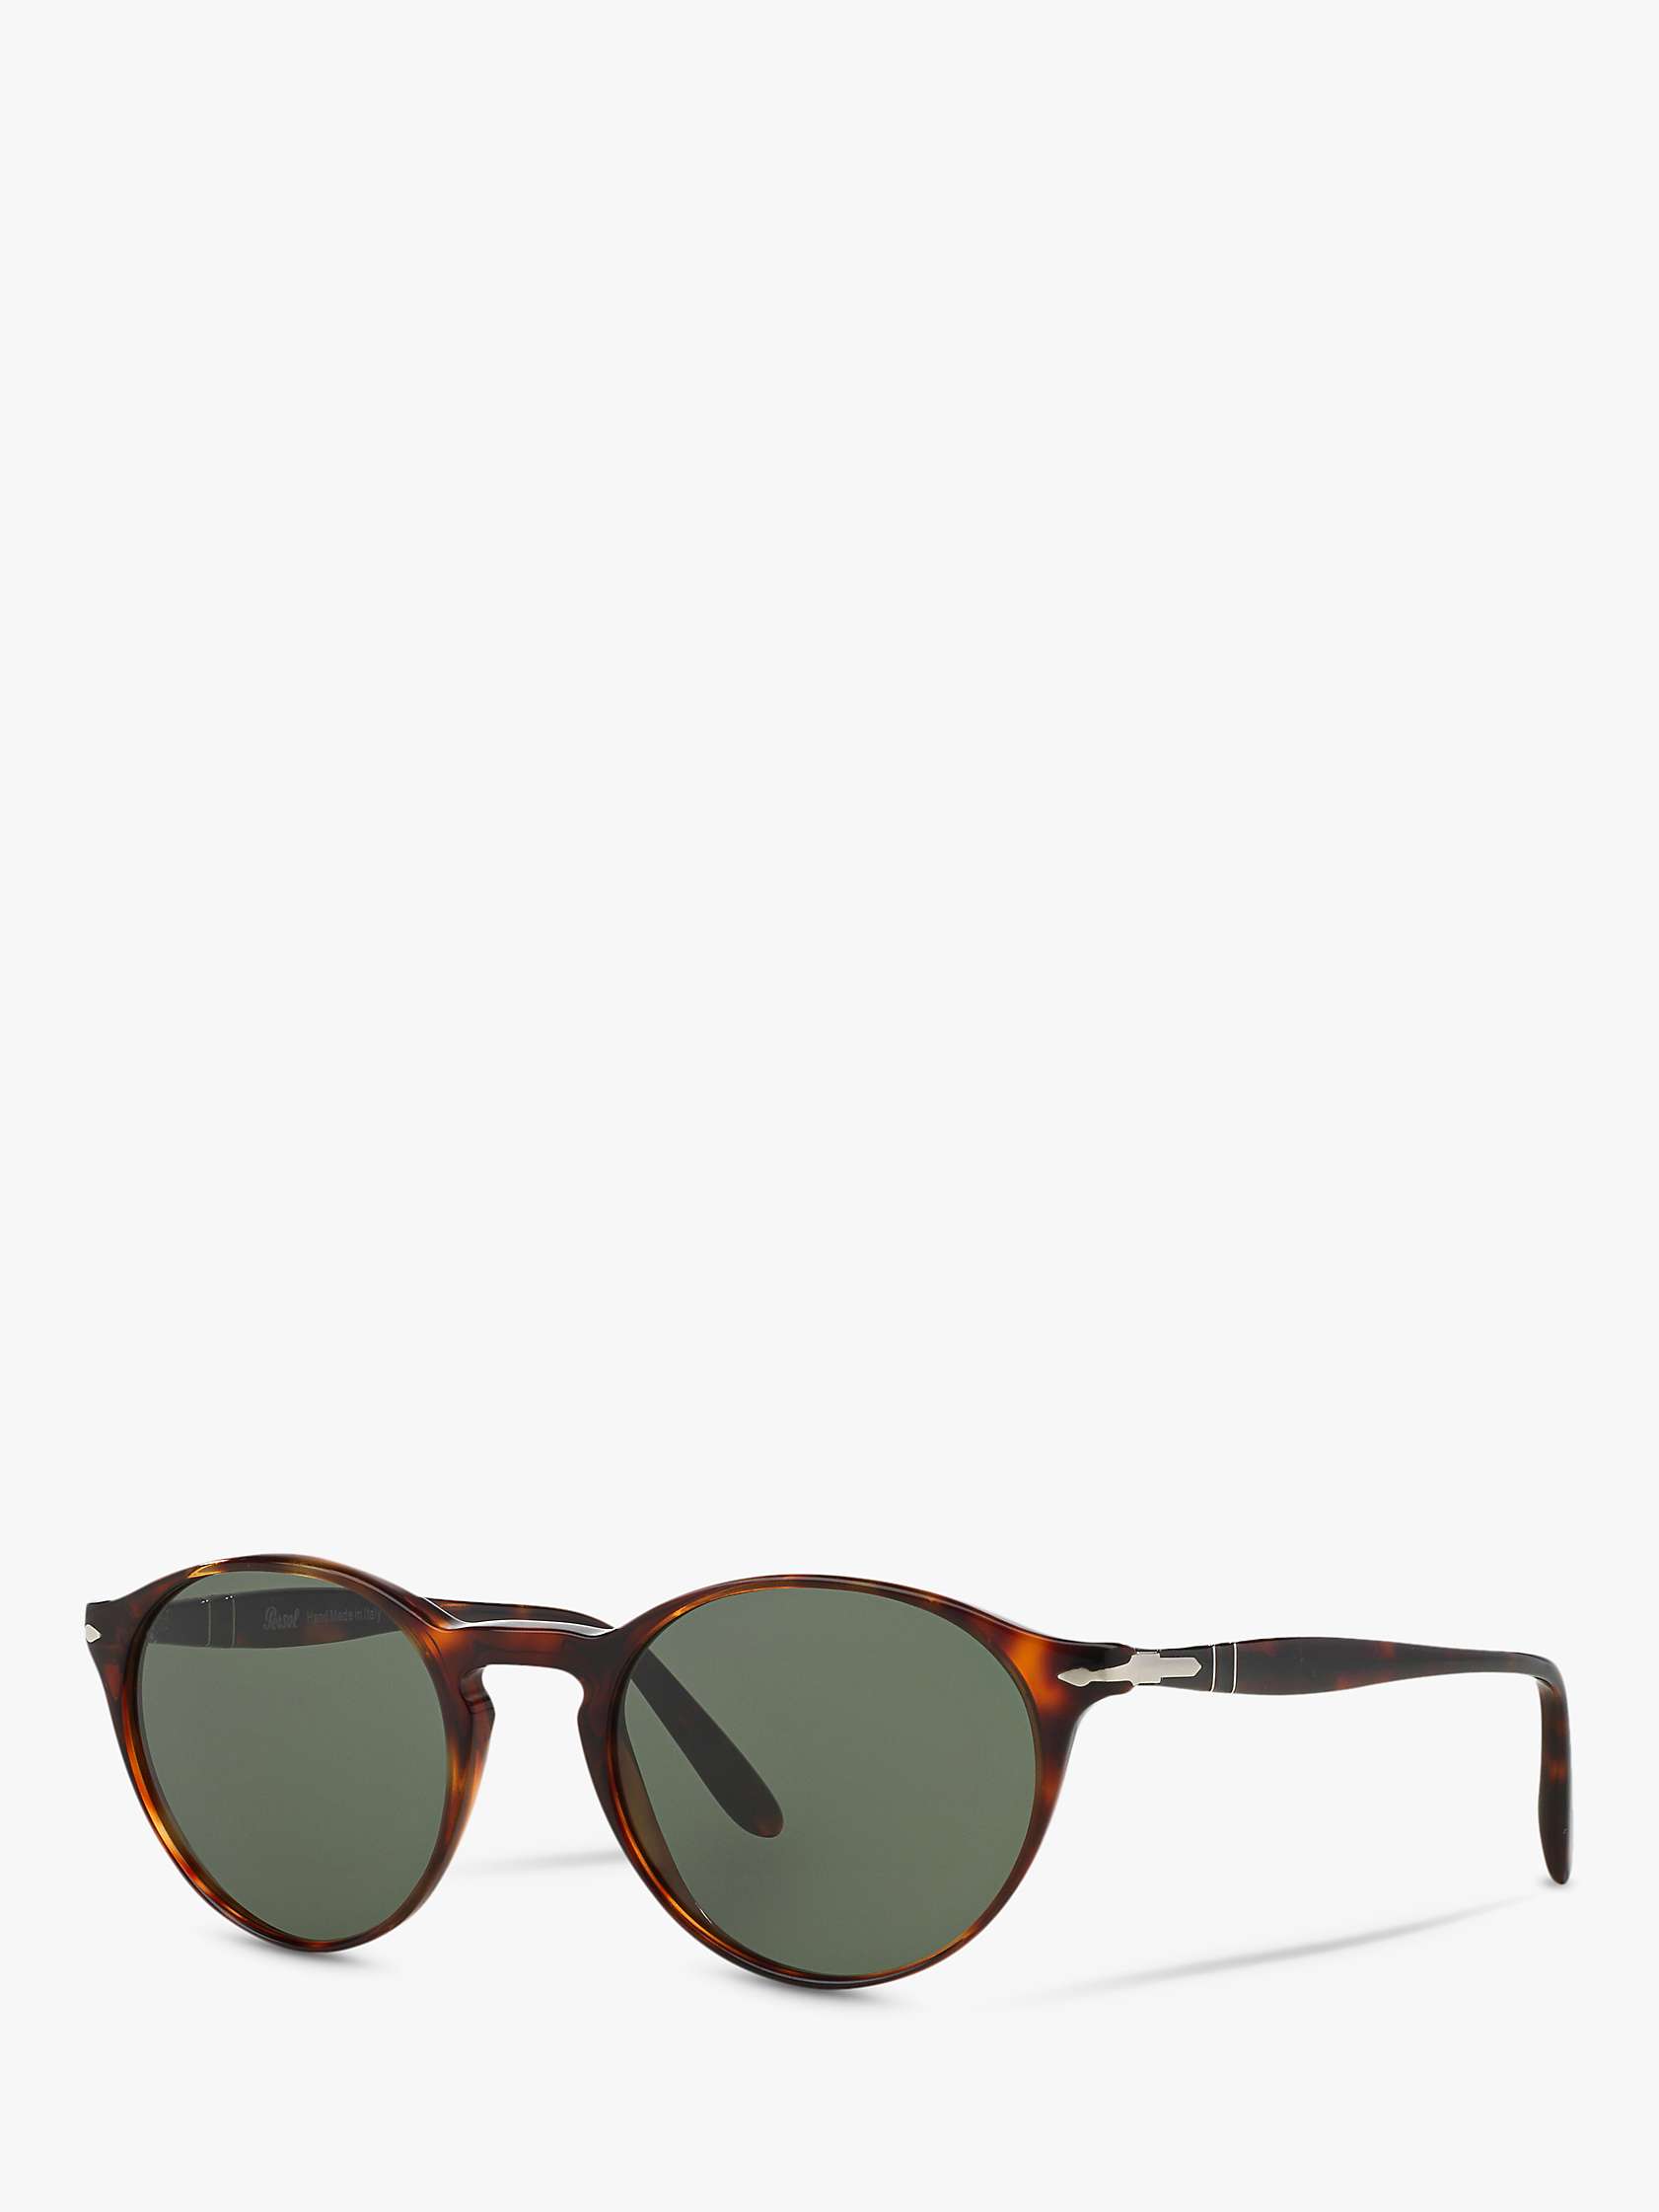 Buy Persol PO3092SM Men's Oval Sunglasses, Tortoise/Green Online at johnlewis.com